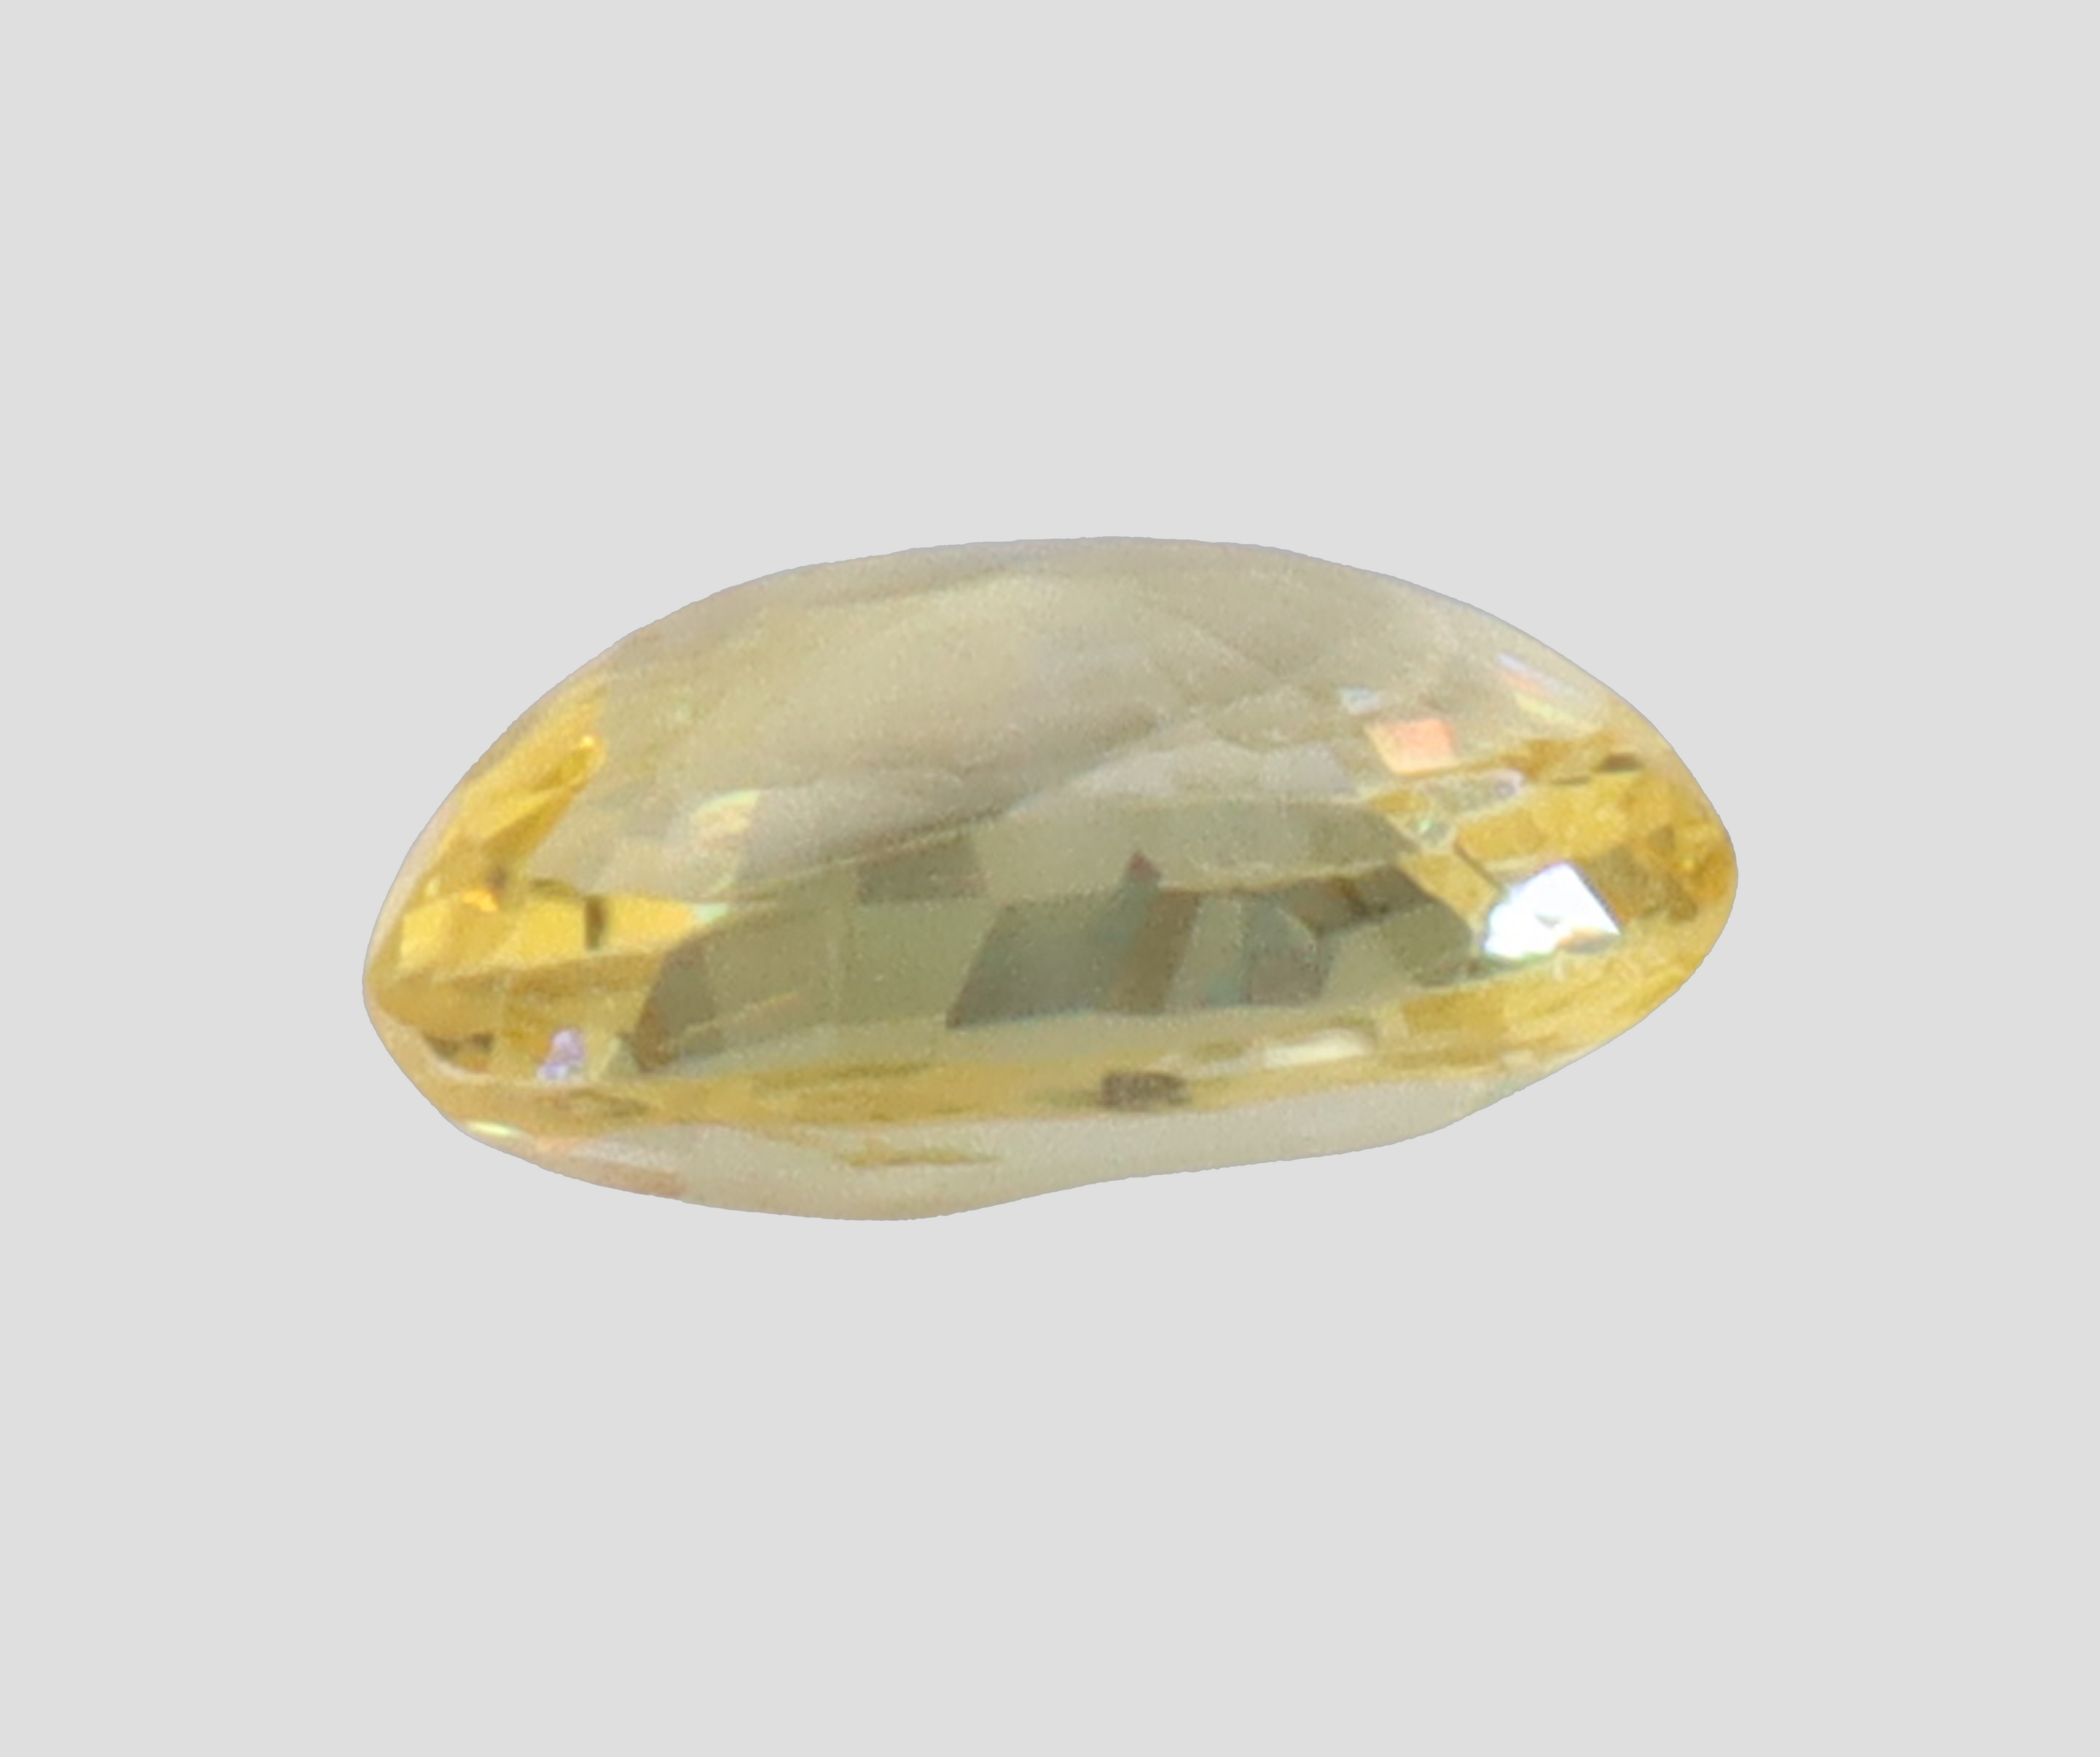 Yellow Sapphire - 3.04 Carats